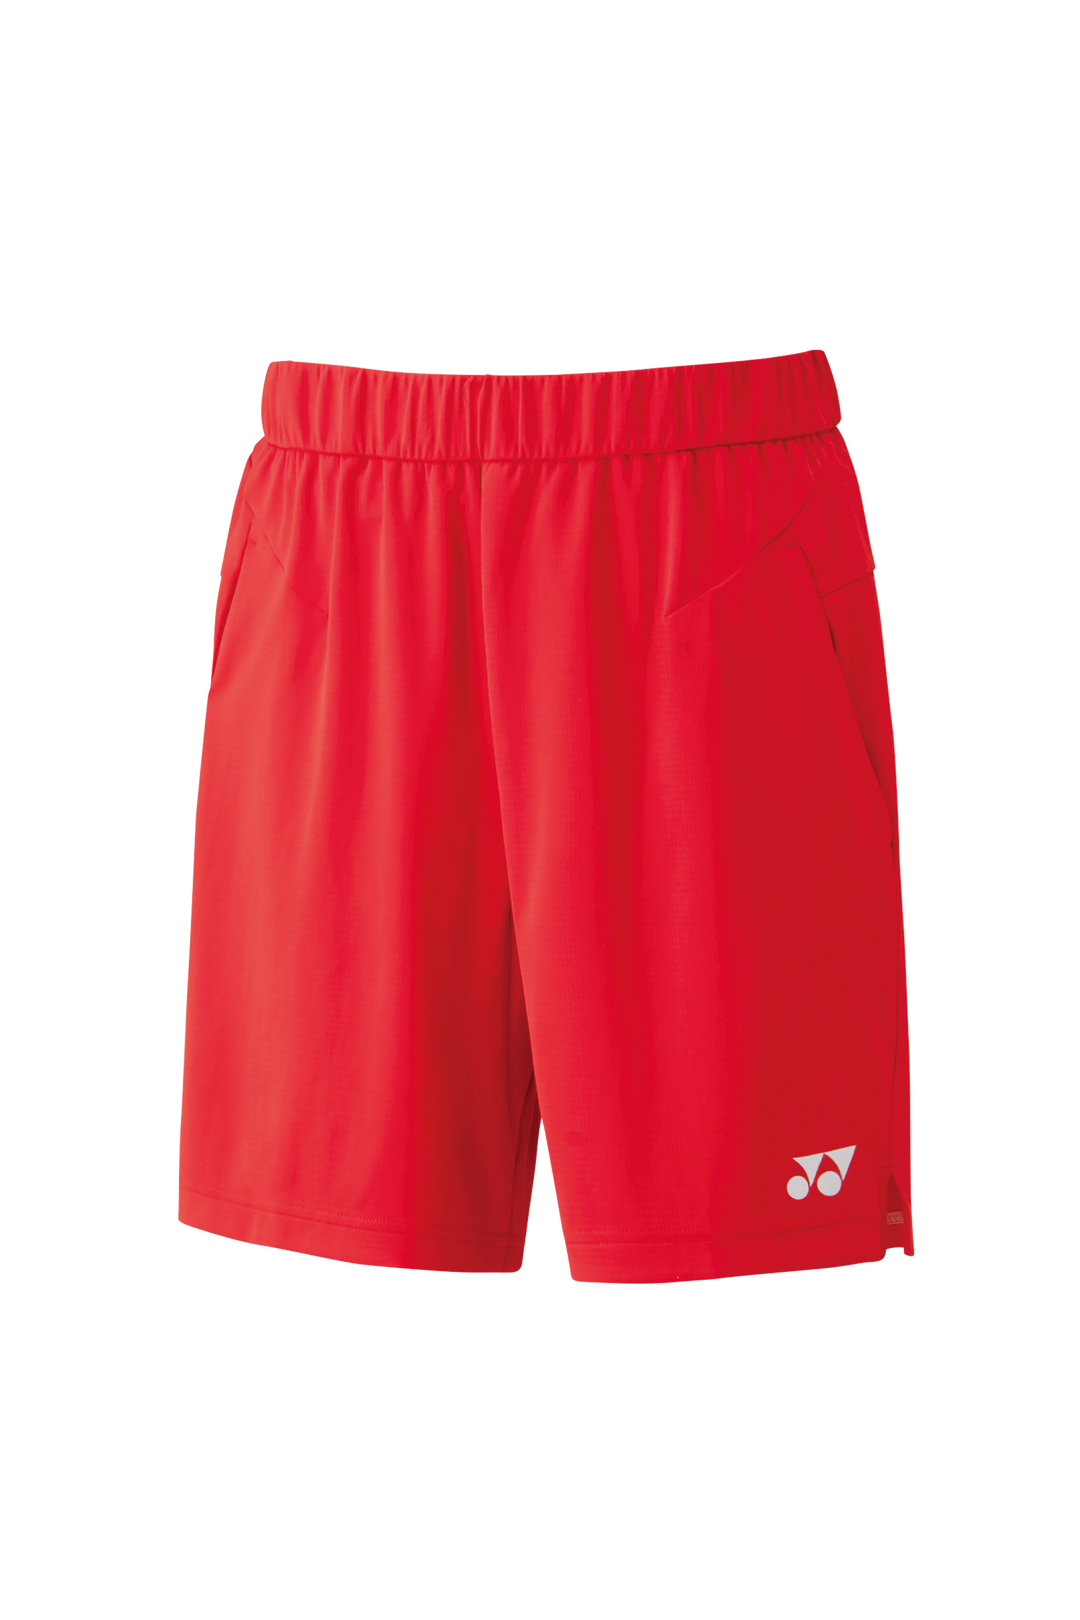 Yonex Men's Shorts 15114 Tornado Red Shorts Yonex 